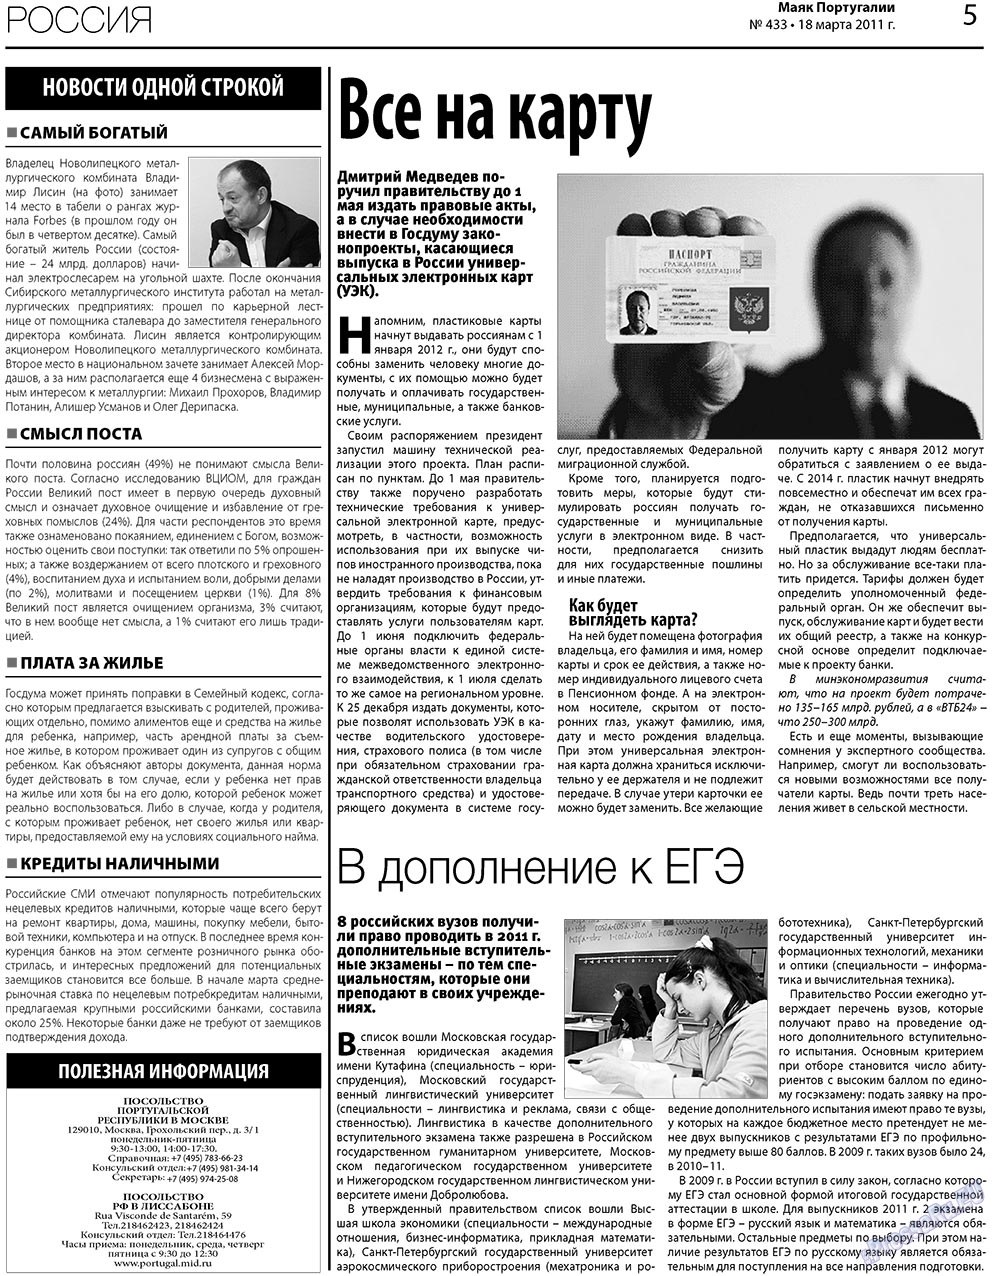 Маяк Португалии, газета. 2011 №433 стр.5